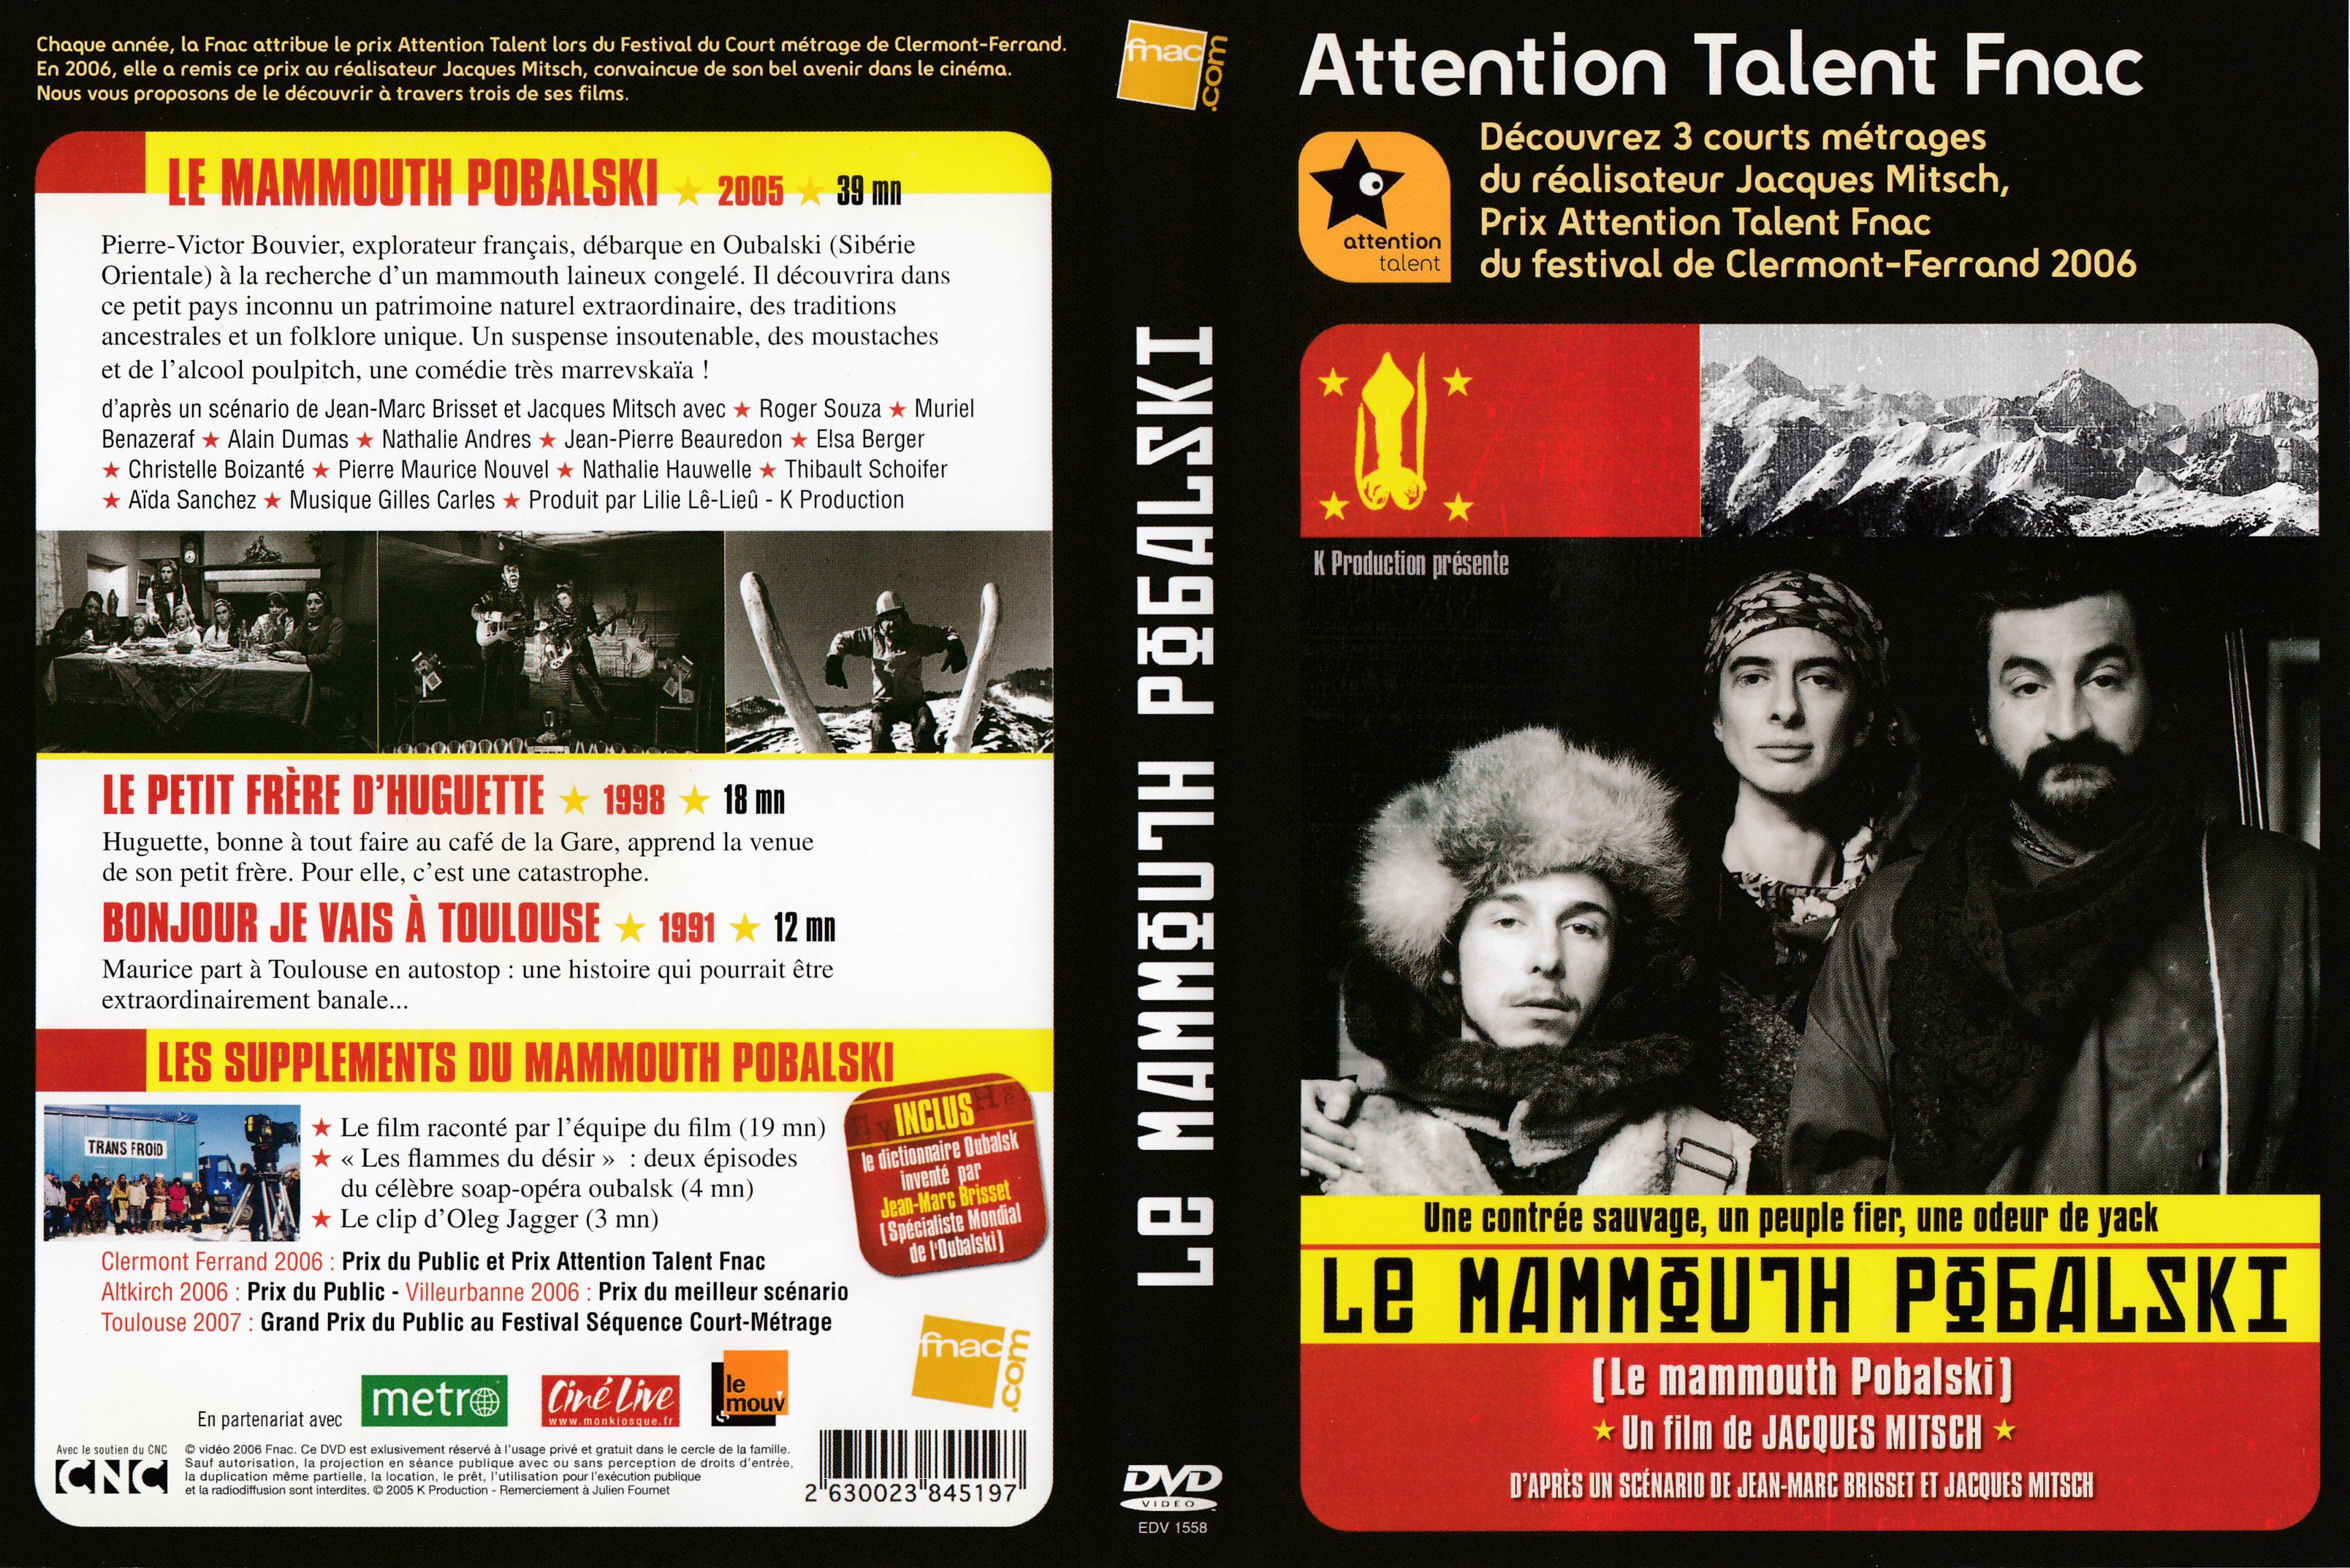 Jaquette DVD Le Mammouth Pobalski